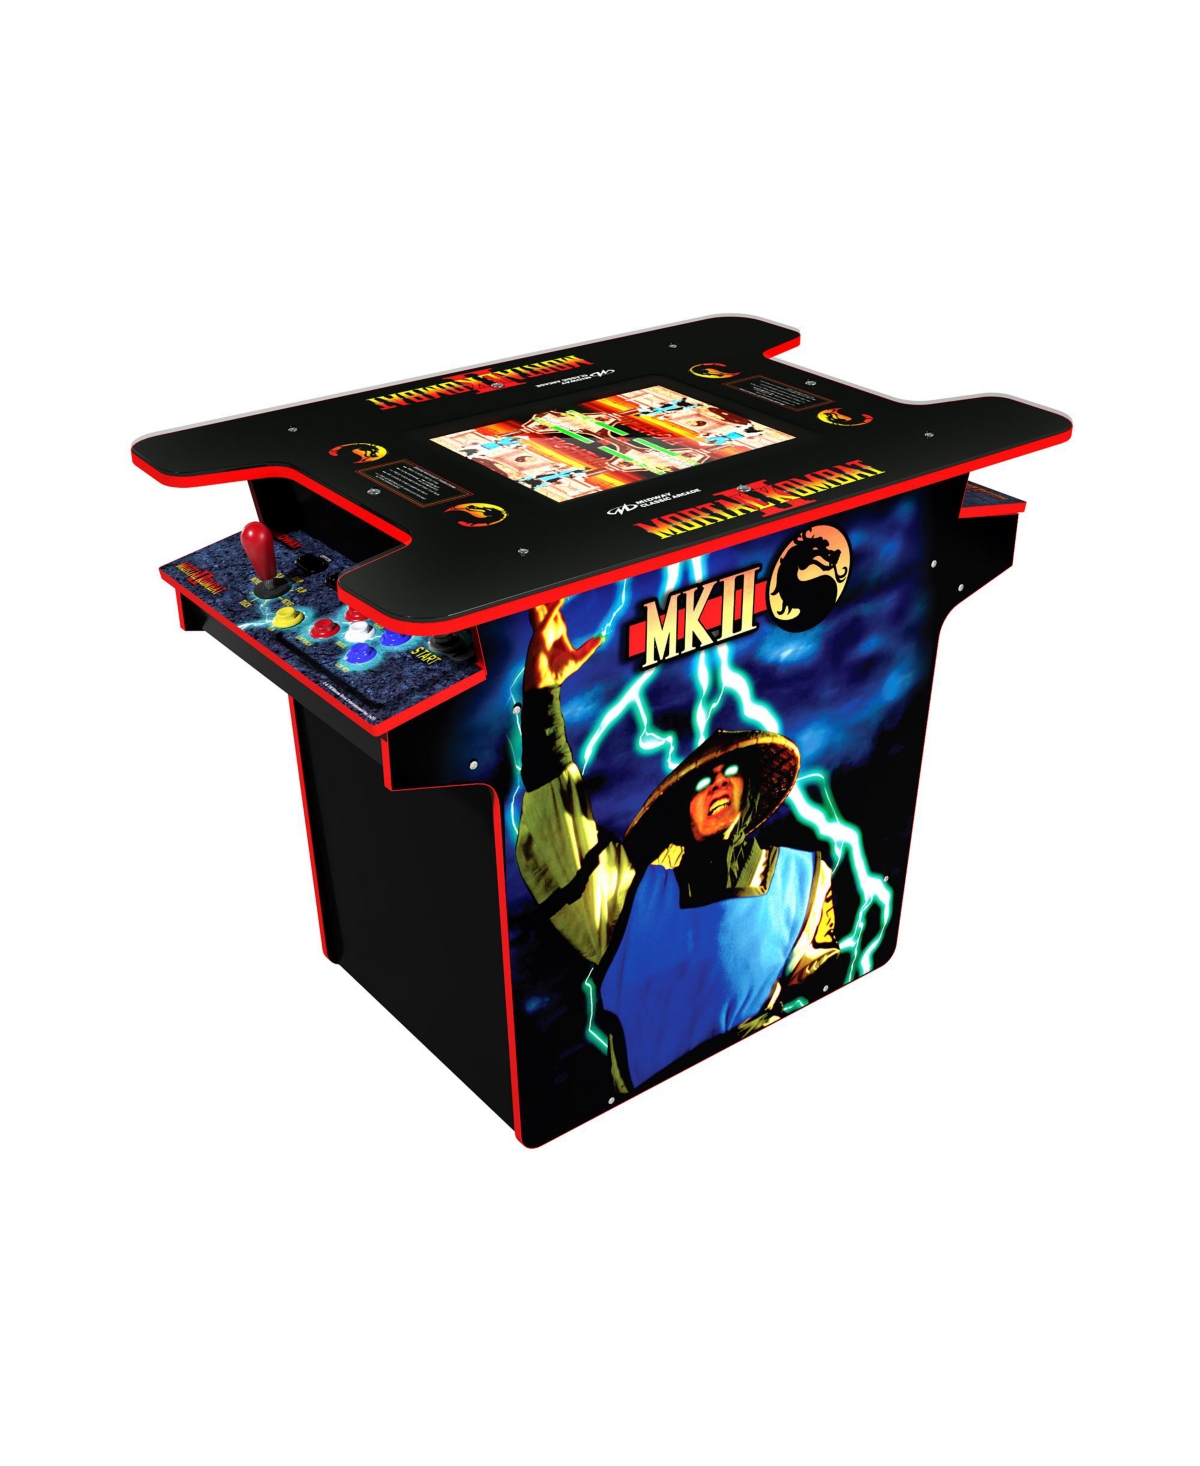 Mortal Kombat Head to Head Arcade Table